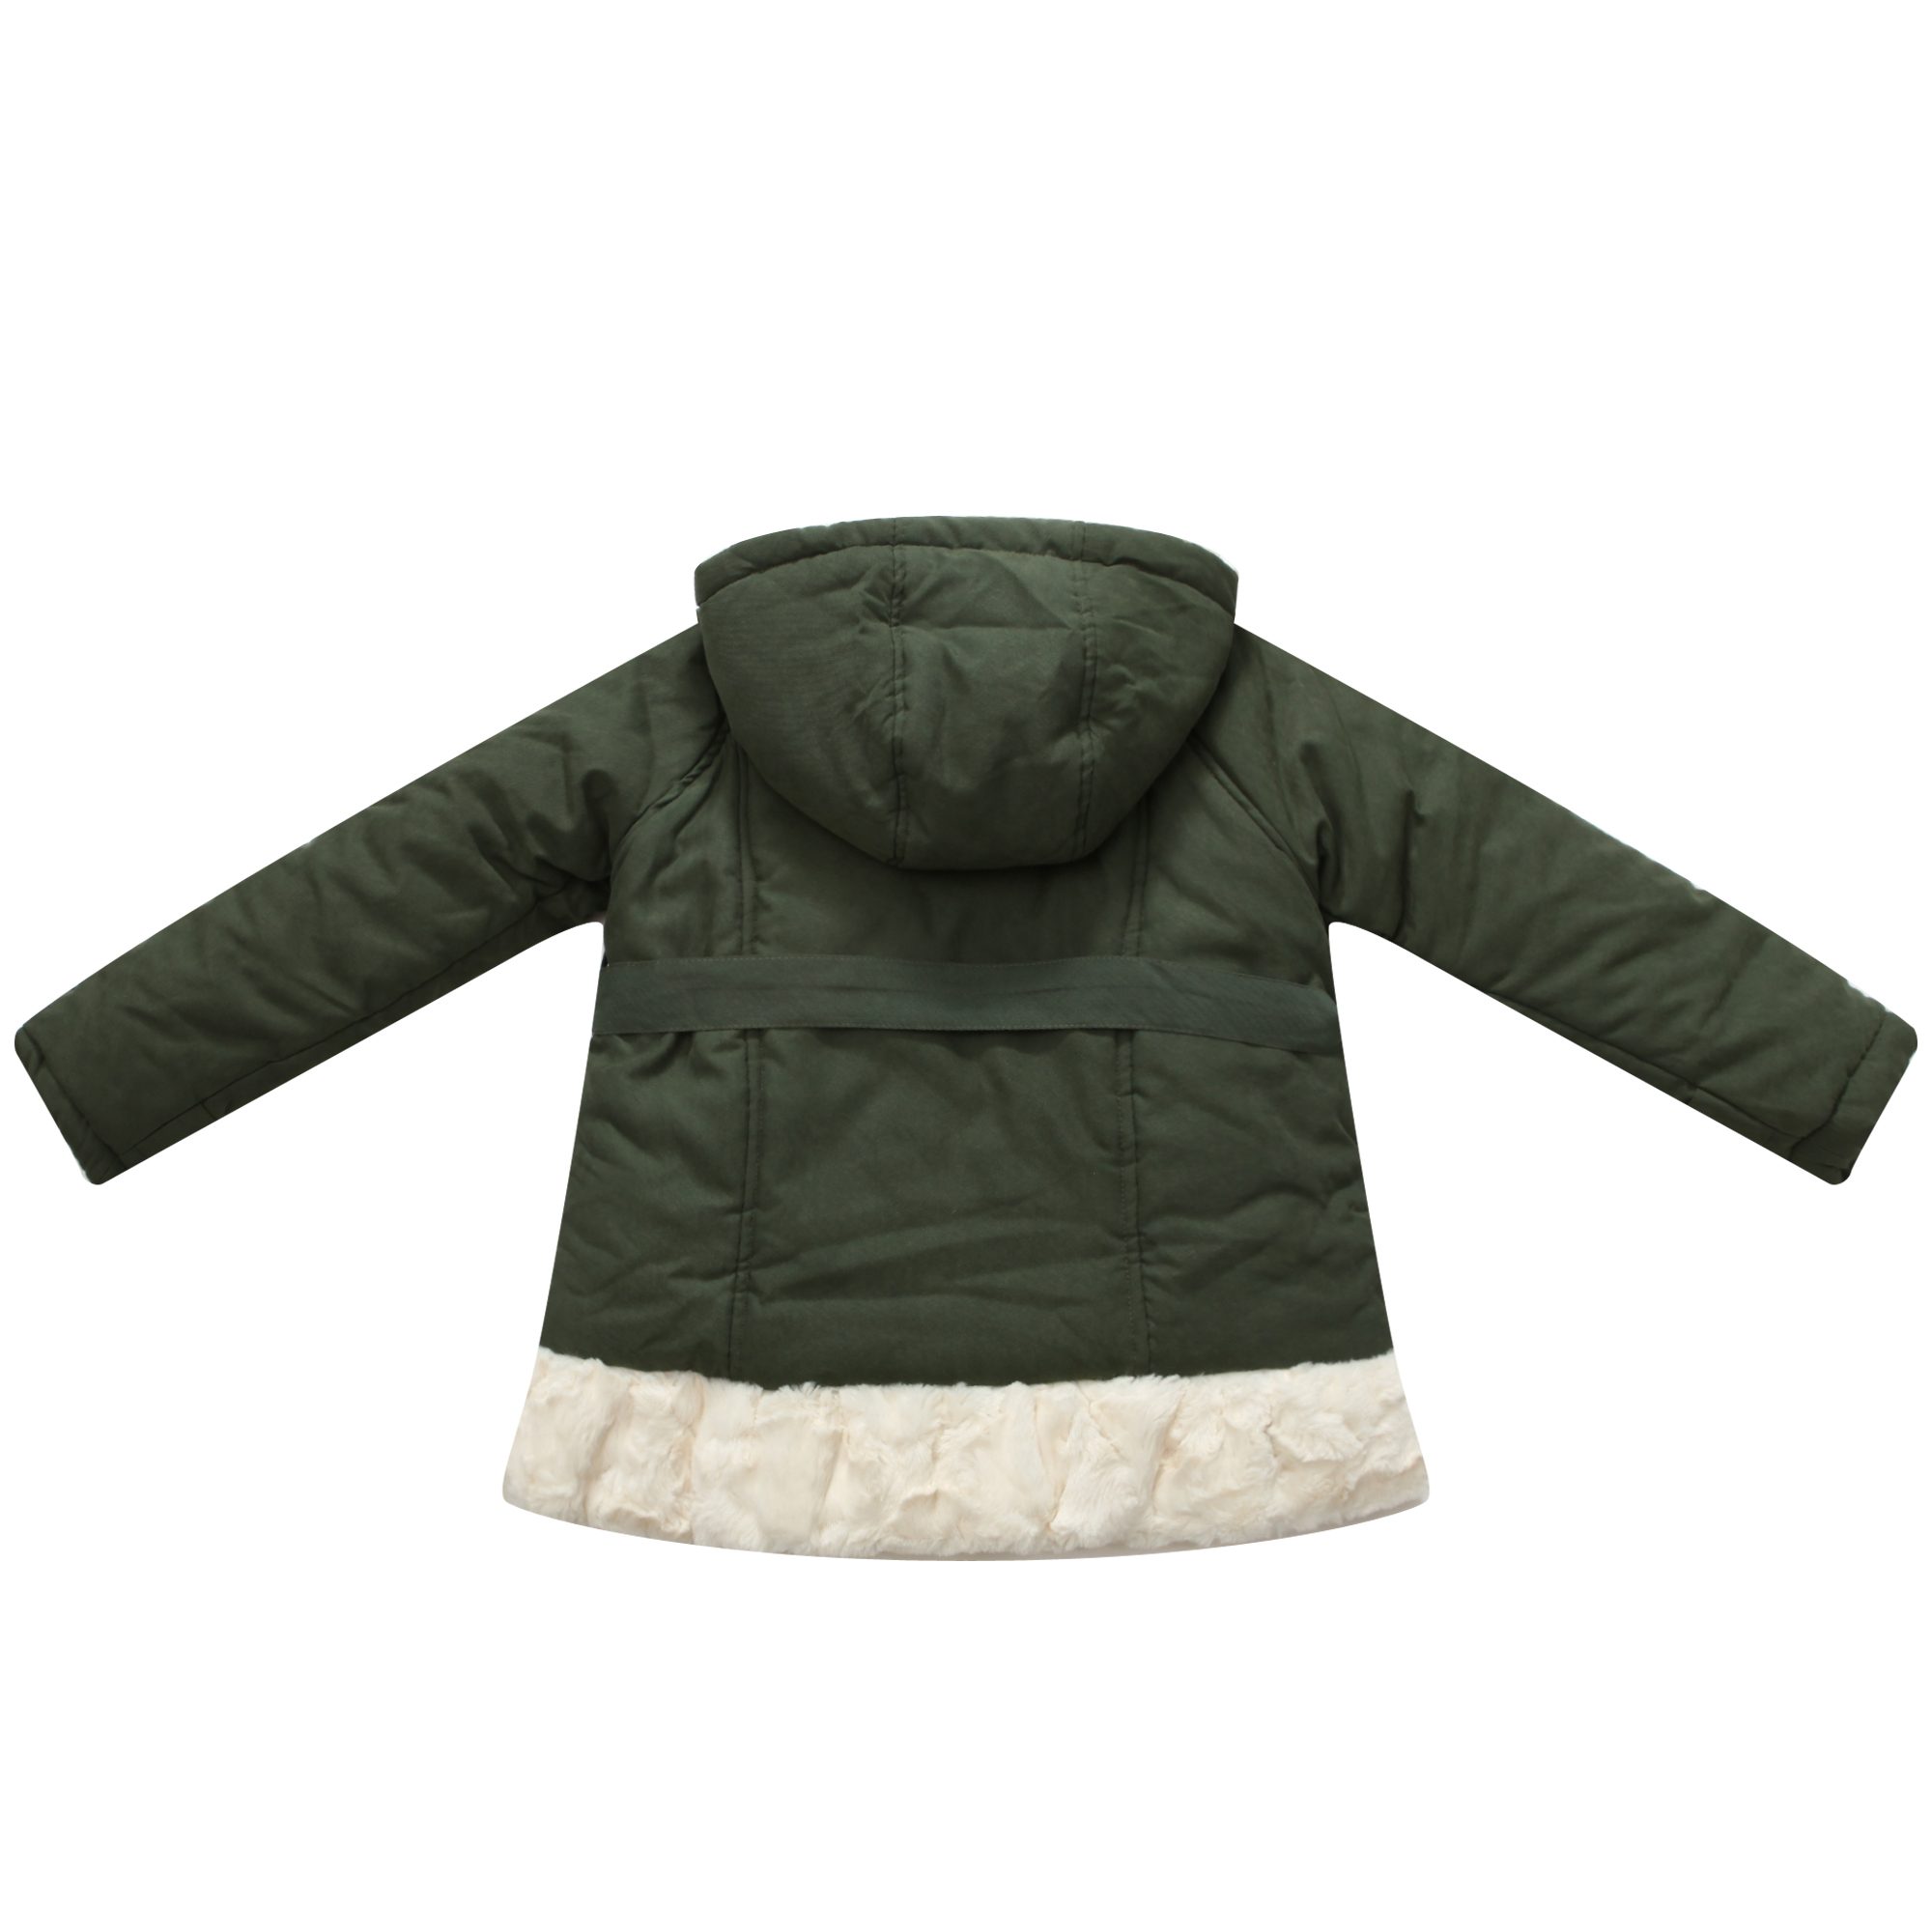 Richie House Little Girls Warm Green Faux Fur Trim Adjustable Belt Coat 4/5 - image 2 of 2